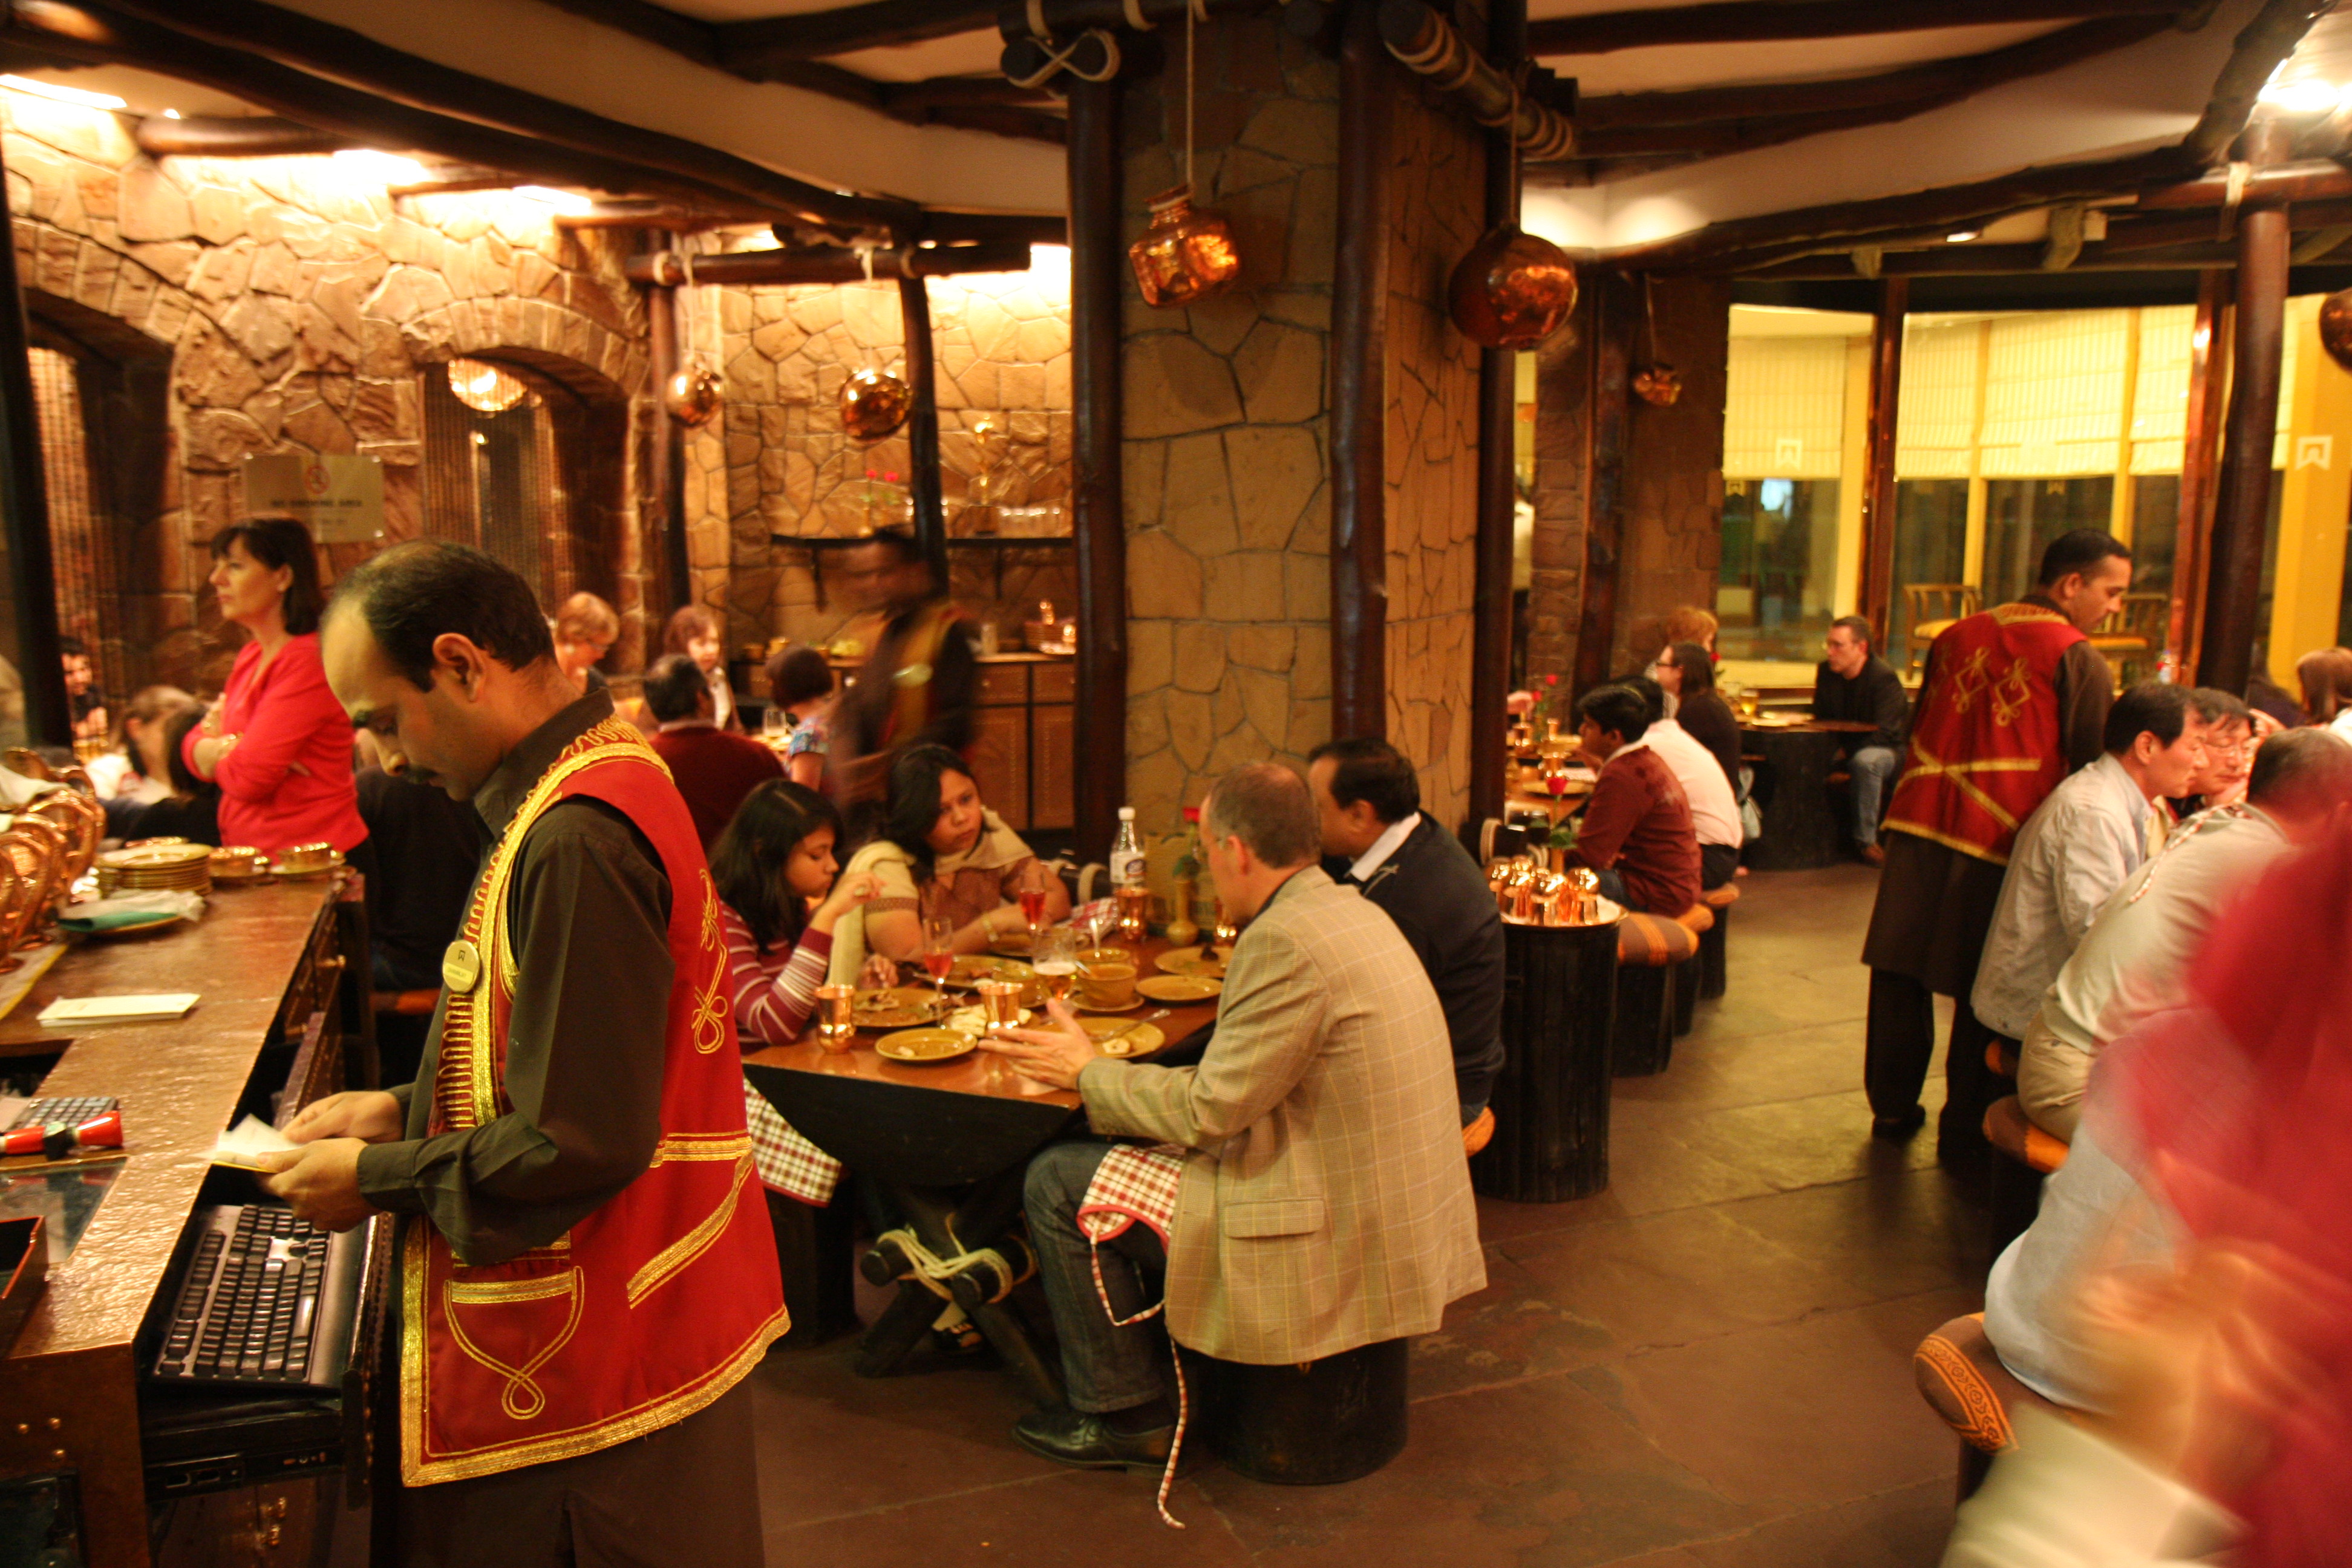 Travel Eats: Bukhara, ITC Maurya Hotel, New Delhi, India | Flight965